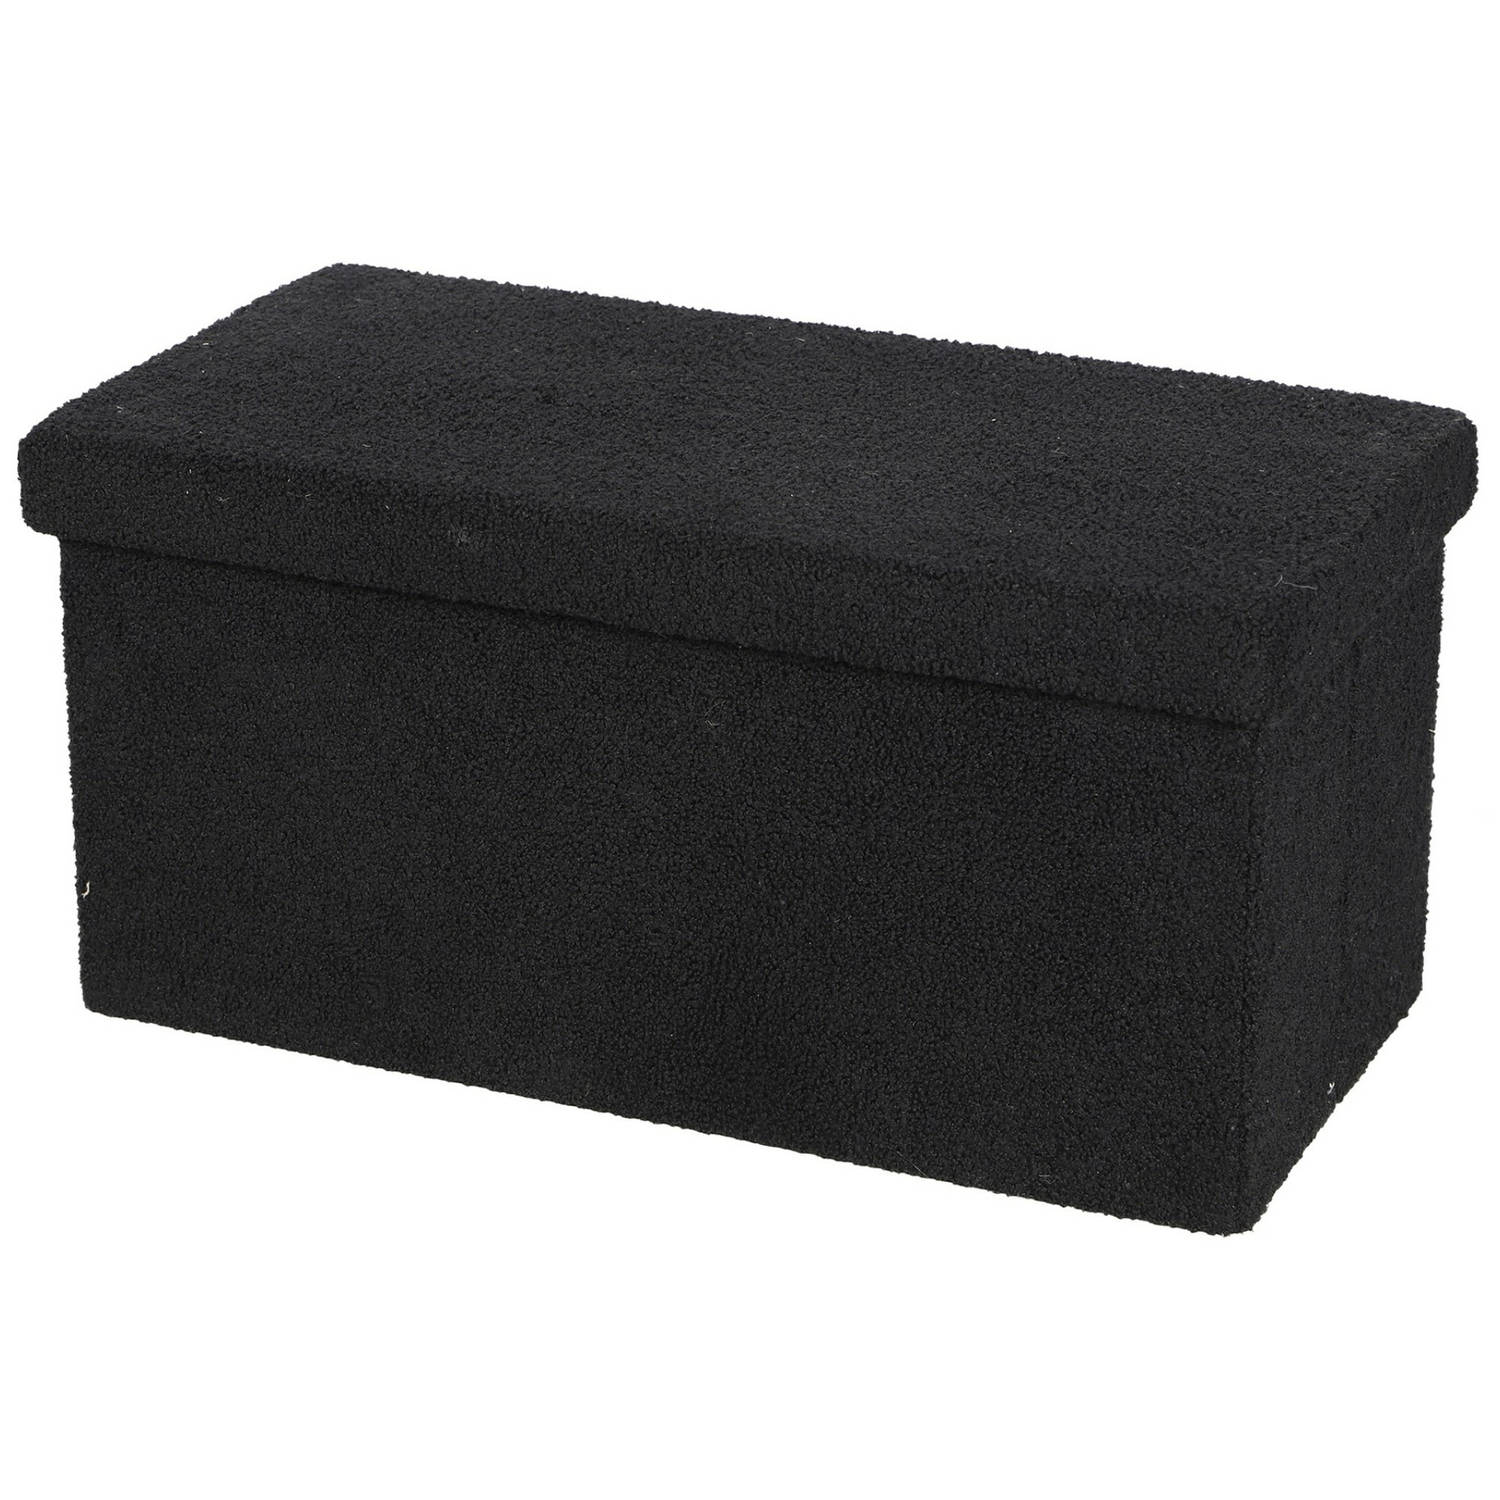 Urban Living Poef Square BOX - hocker - opbergbox - zwart - polyester/mdf - 76 x 38 x 38 cm - opvouwbaar - Extra groot/2-zits model